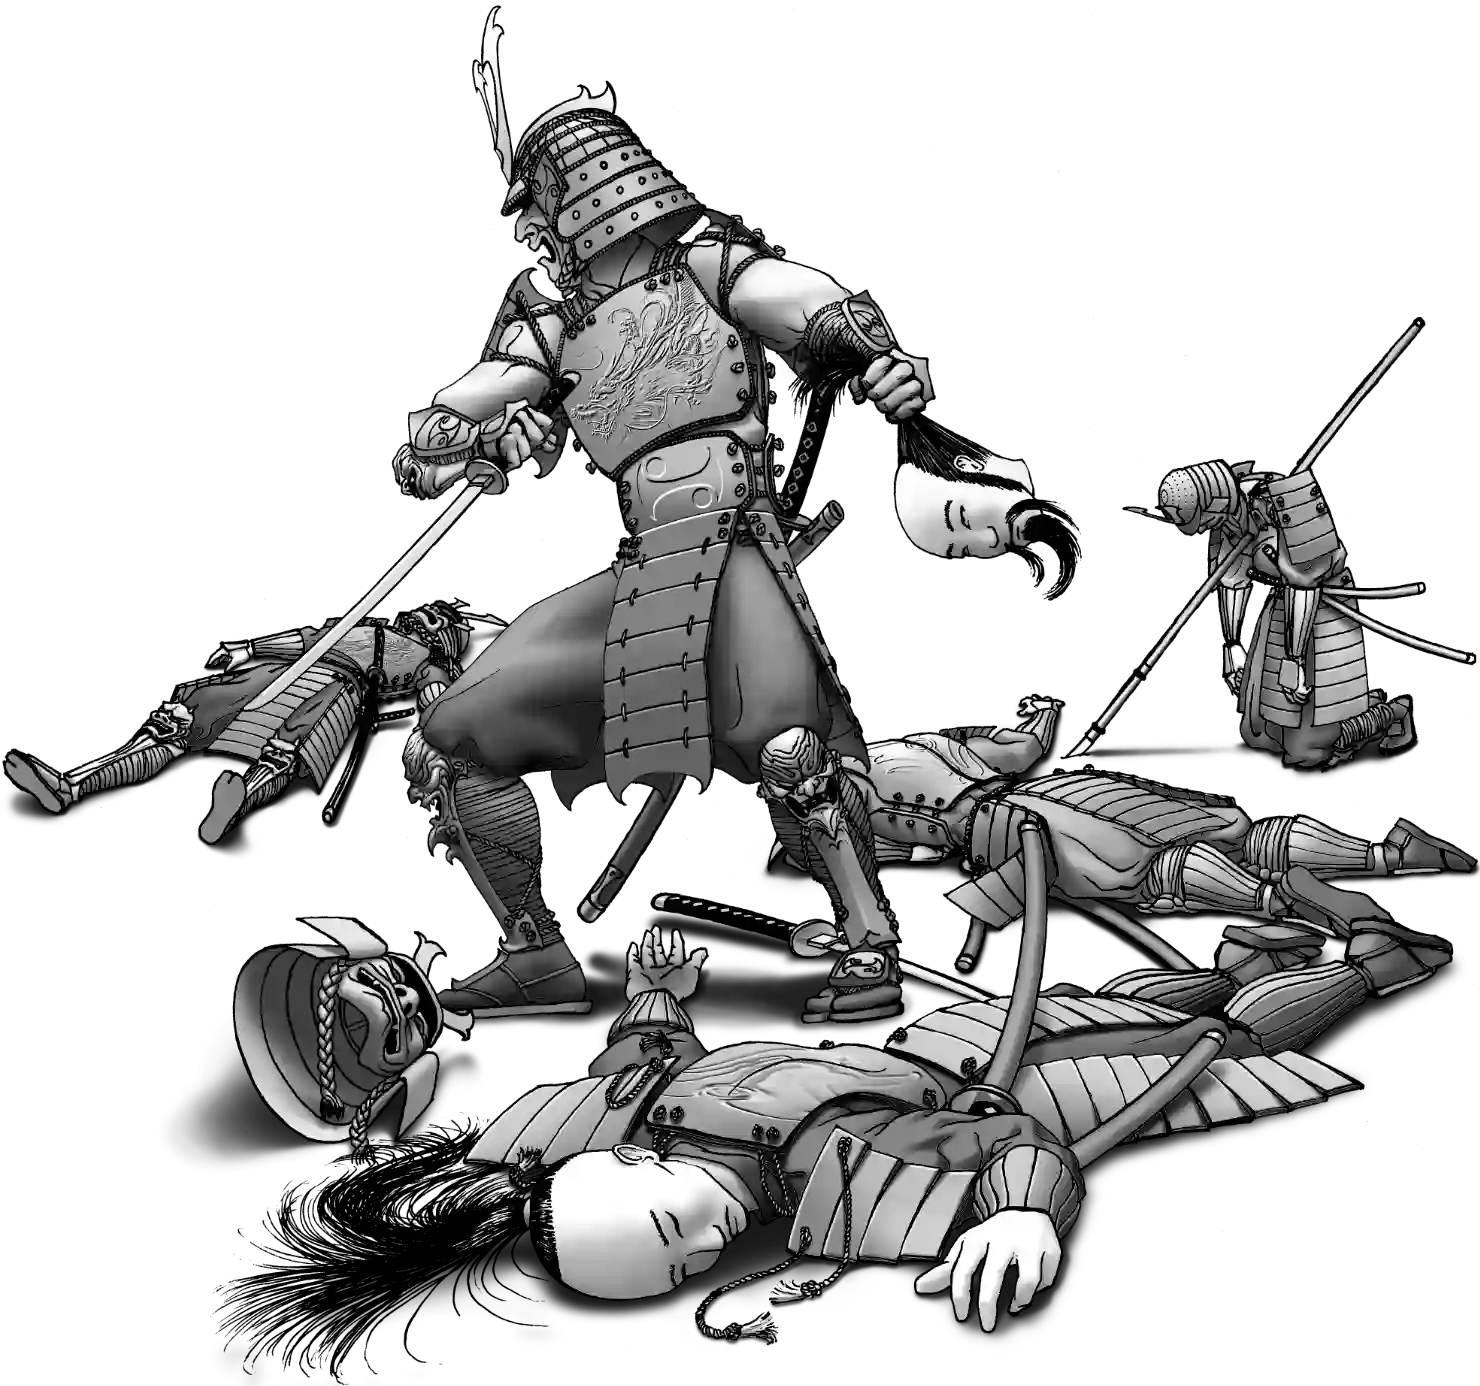 A samurai amongst other dead samurai.